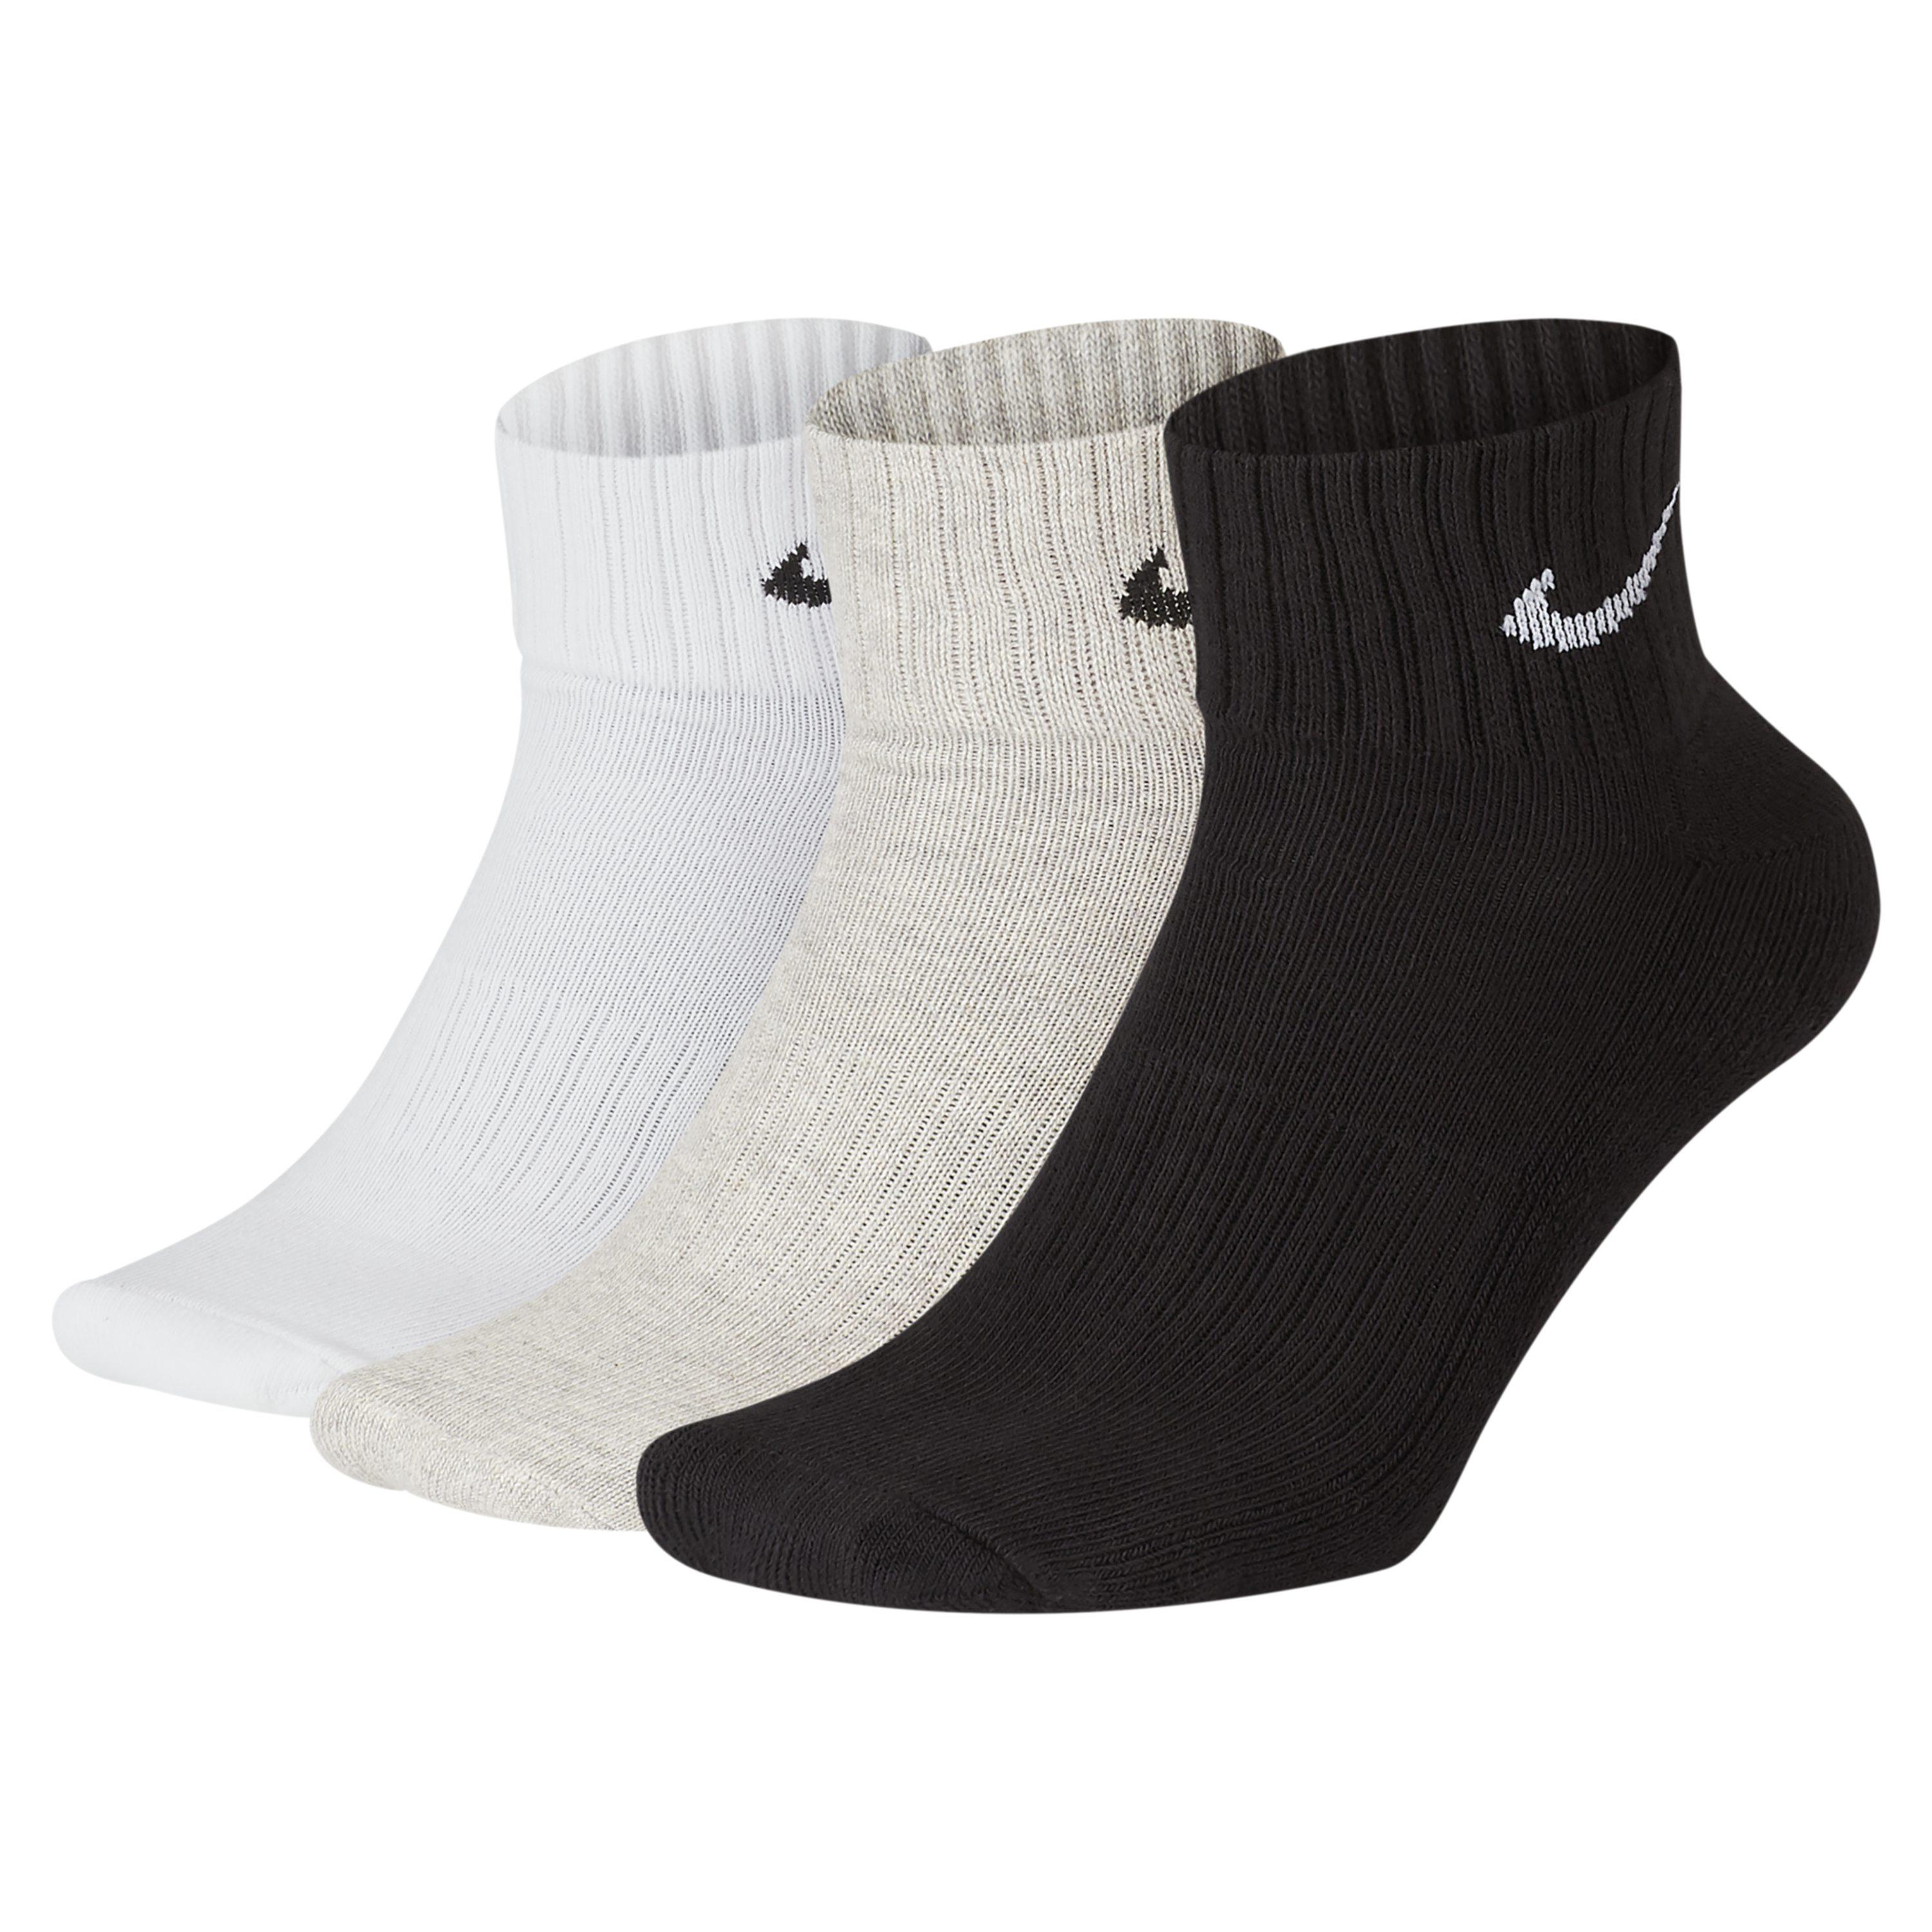 Nike Cotton Cushion Training Ankle Socks (3 Pairs) - Save 33% - Lyst